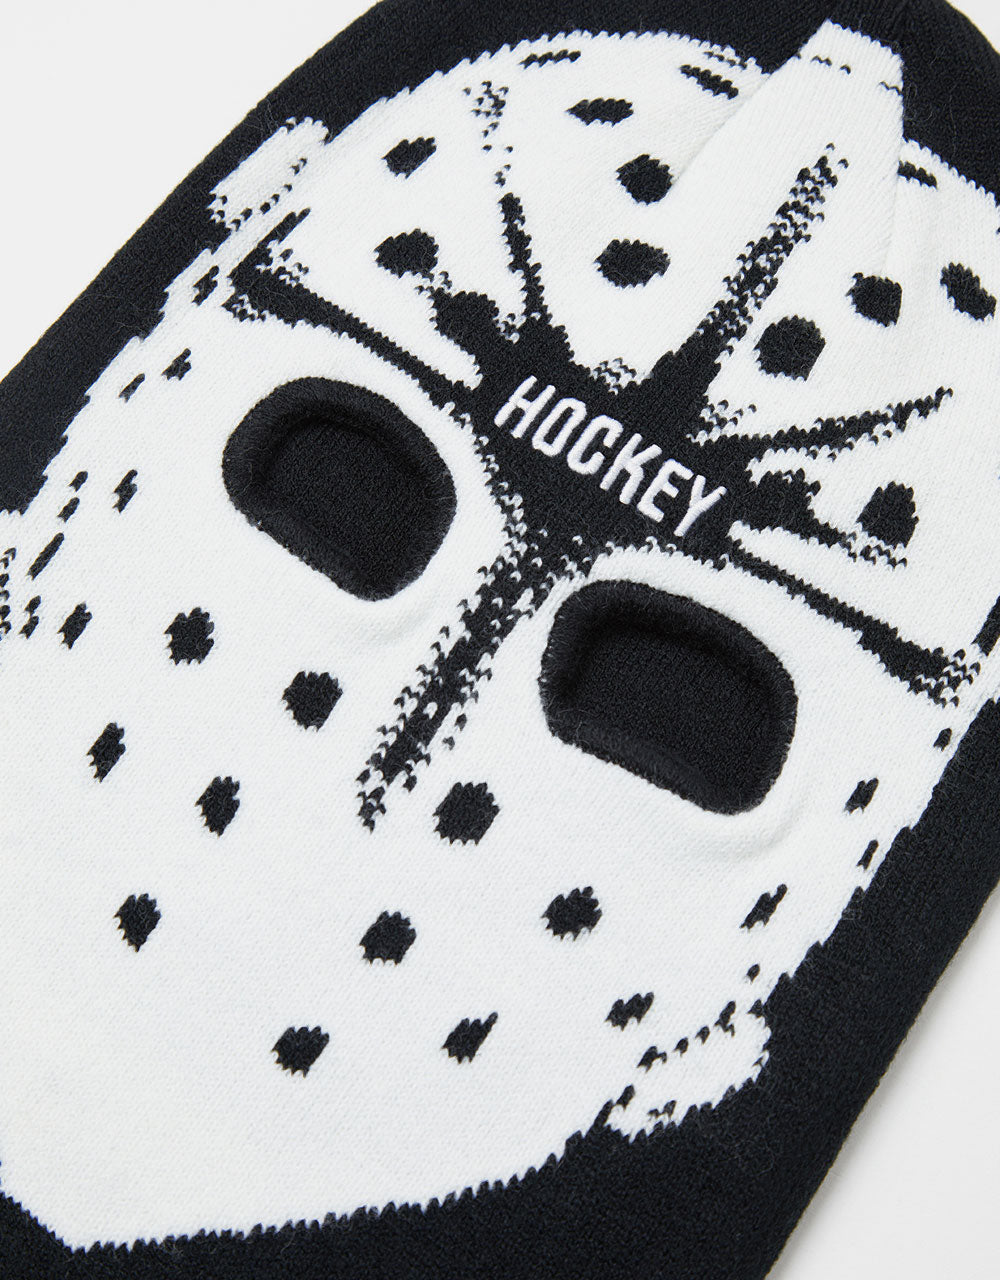 Hockey x Independent Hockski Mask Beanie - Black